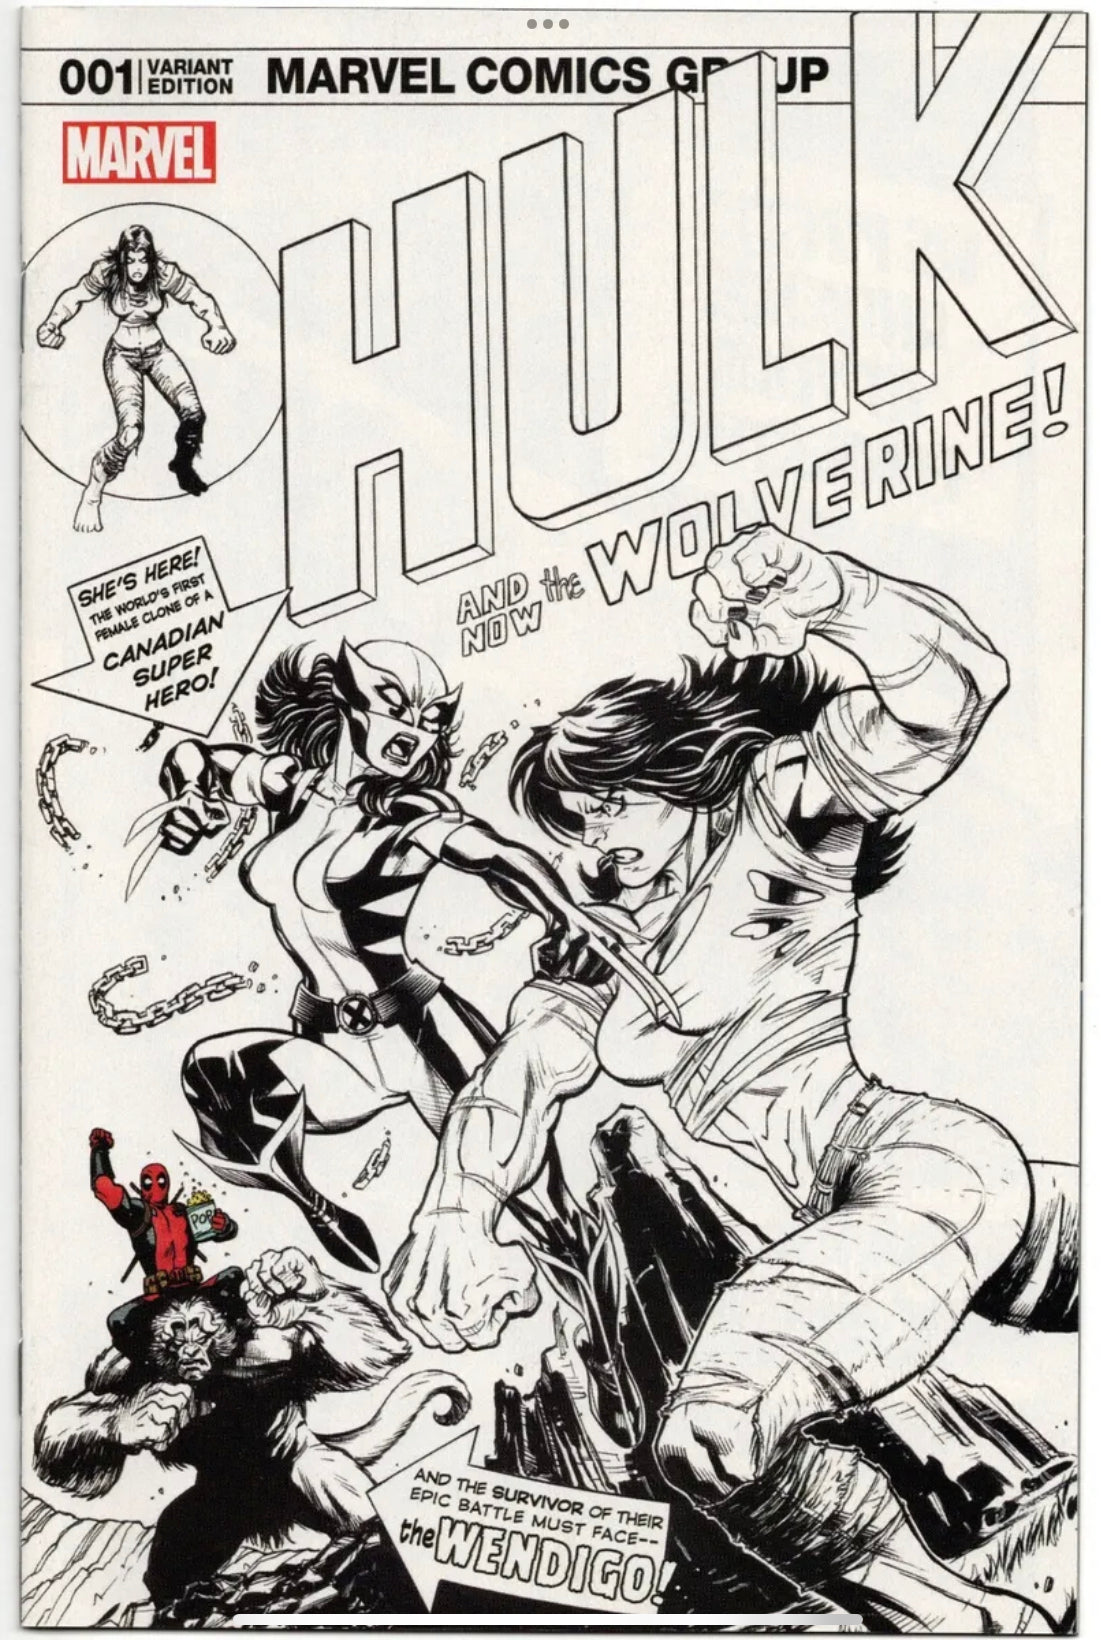 Hulk #1 (2017) Ed McGuiness Hall of Comics Exclusive (Cover B) B&W Sketch - Hulk 181 Homage Variant